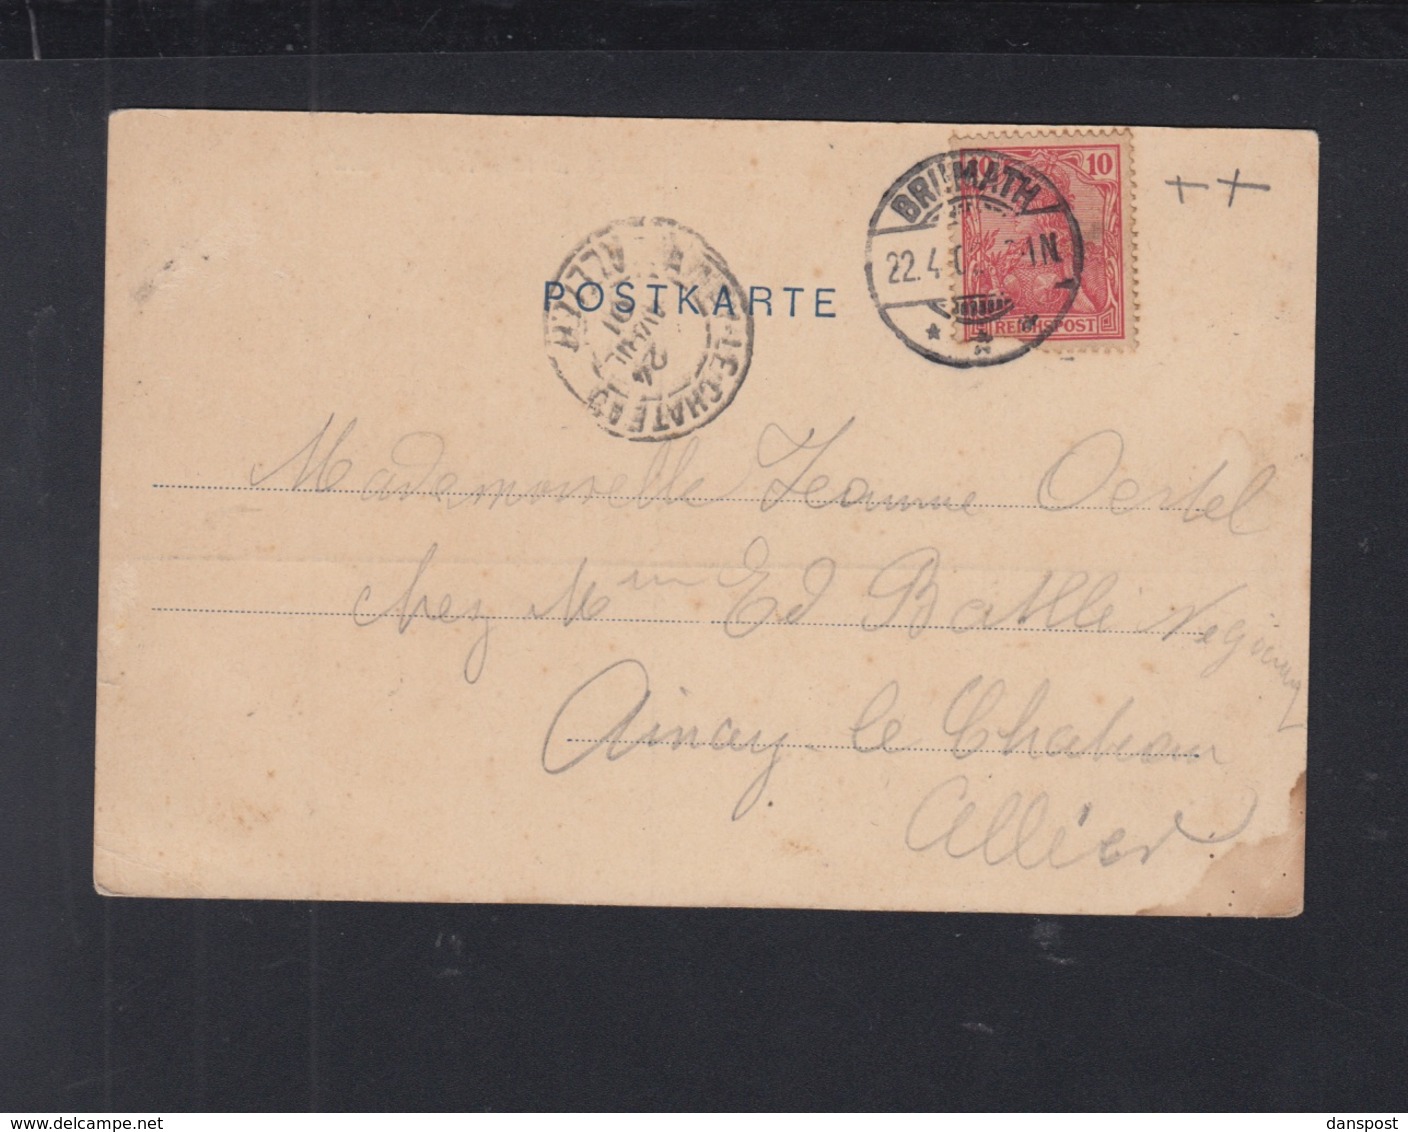 Carte Postale Brumath 1901 - Brumath